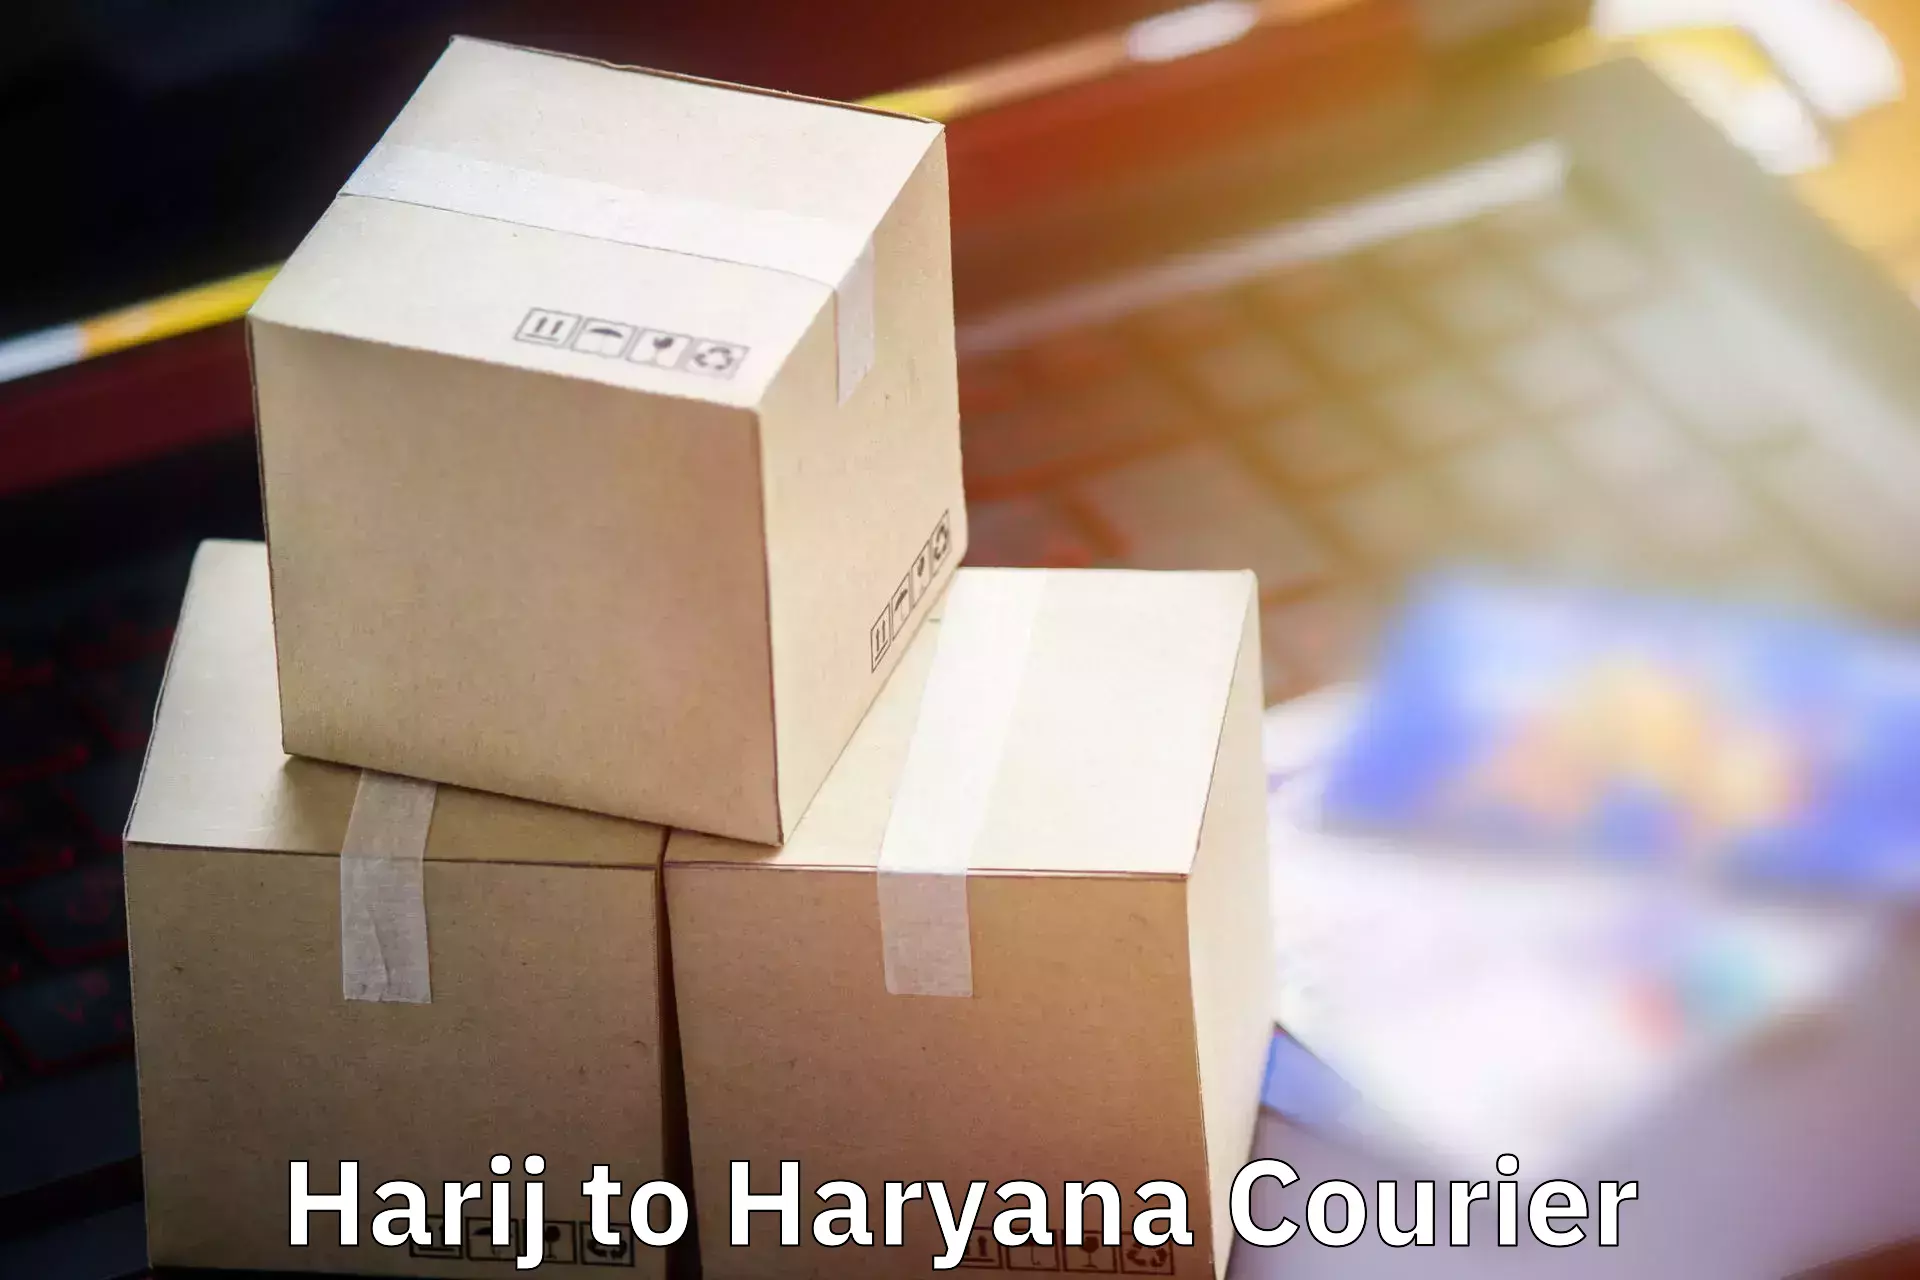 Luggage transfer service Harij to Gurugram